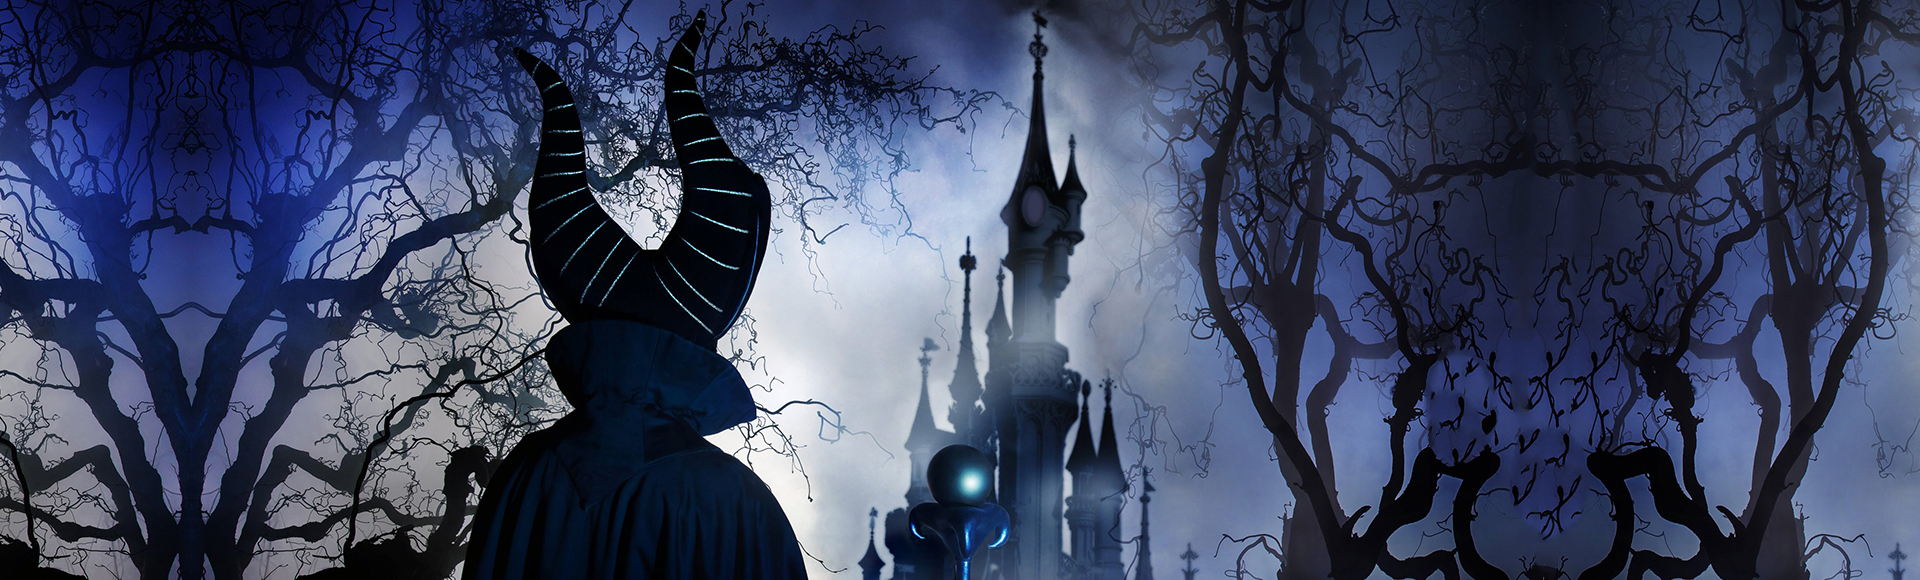 Disney Villains After Hours At Magic Kingdom Floridatix